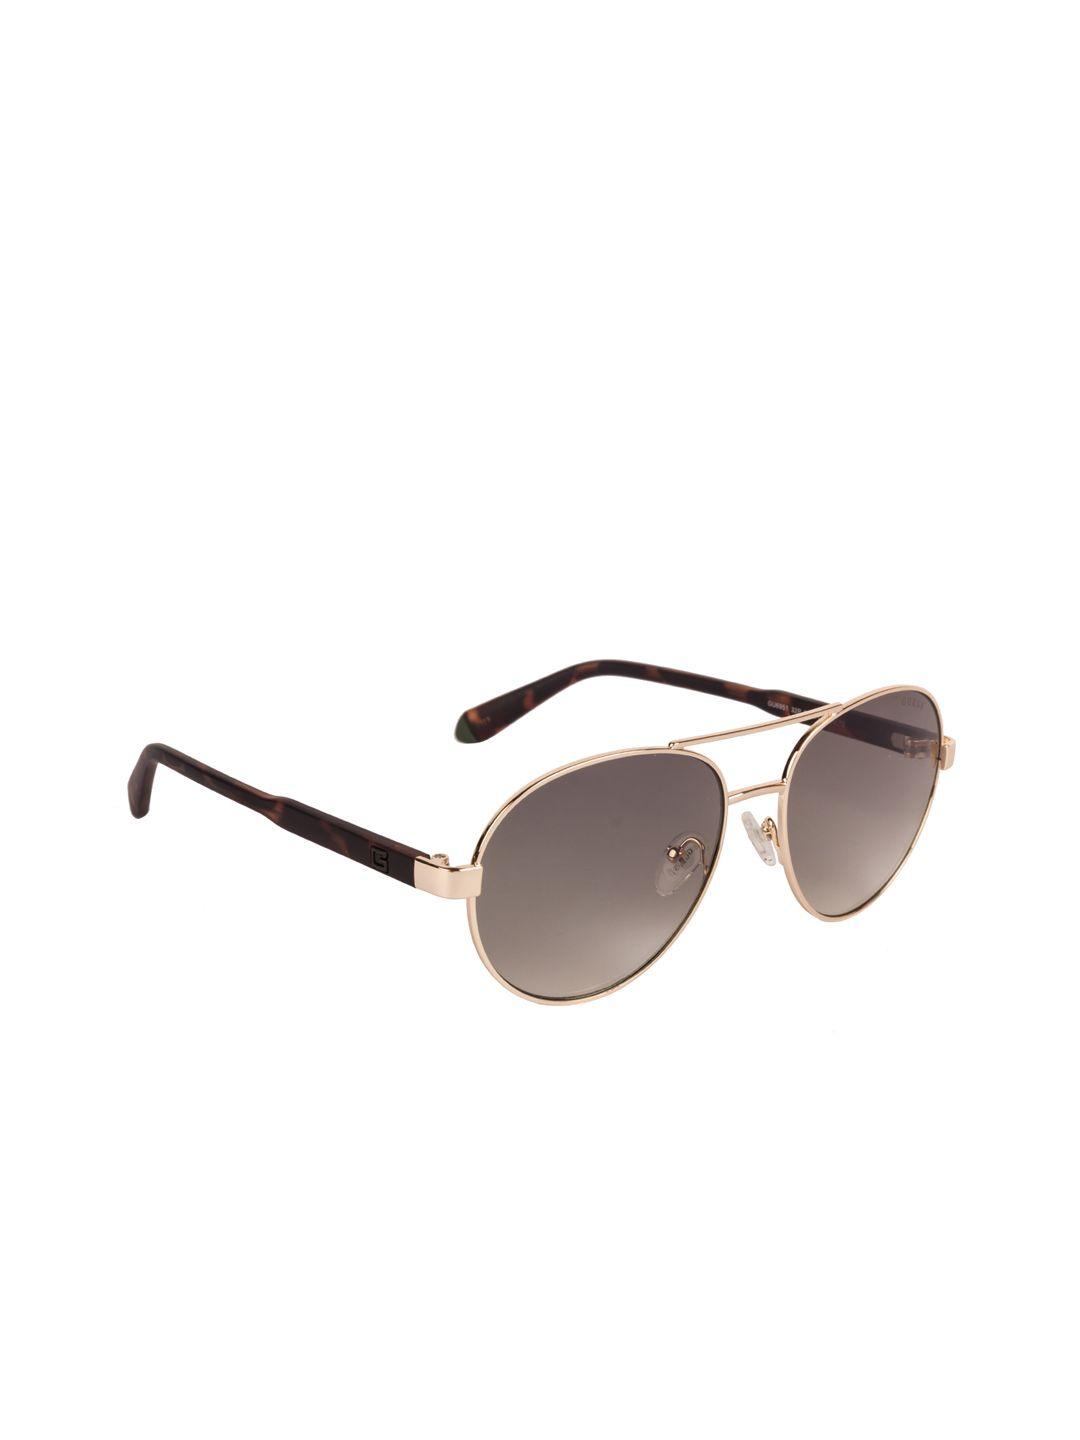 guess-men-aviator-sunglasses-gu6951-57-32p